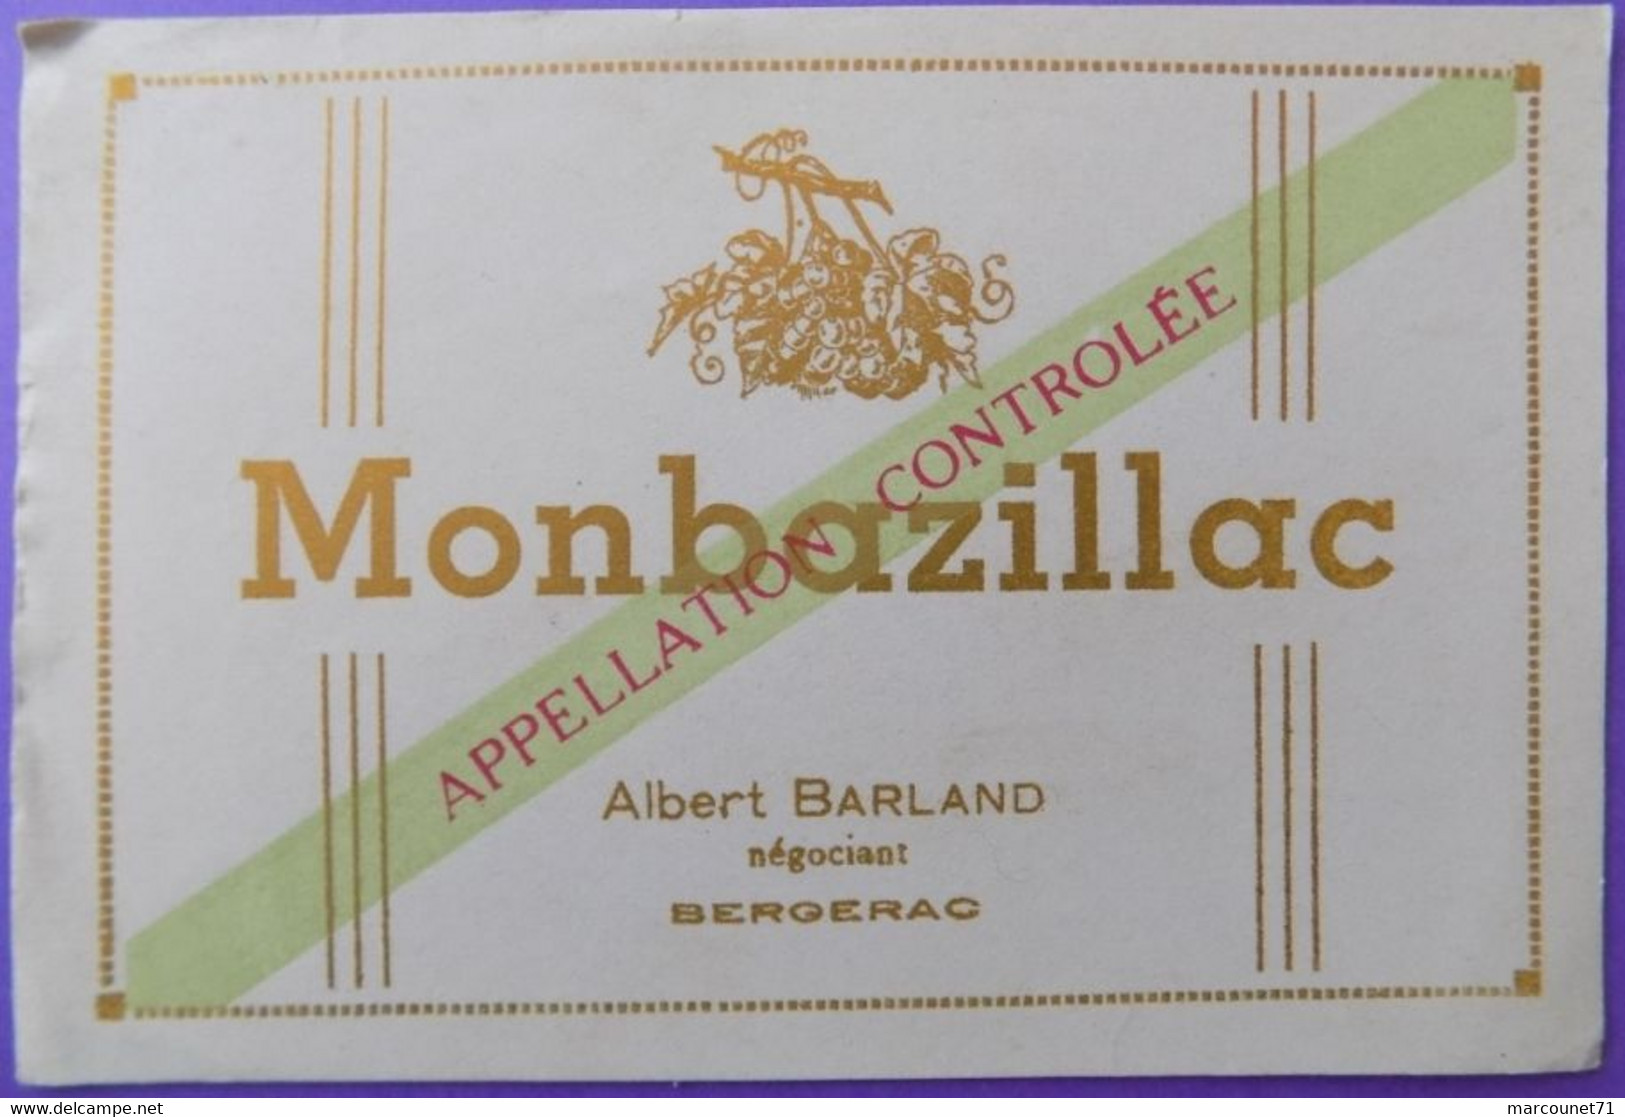 ÉTIQUETTE ANCIENNE ORIGINALE MONBAZILLAC ALBERT BARLAND BERGERAC - Monbazillac